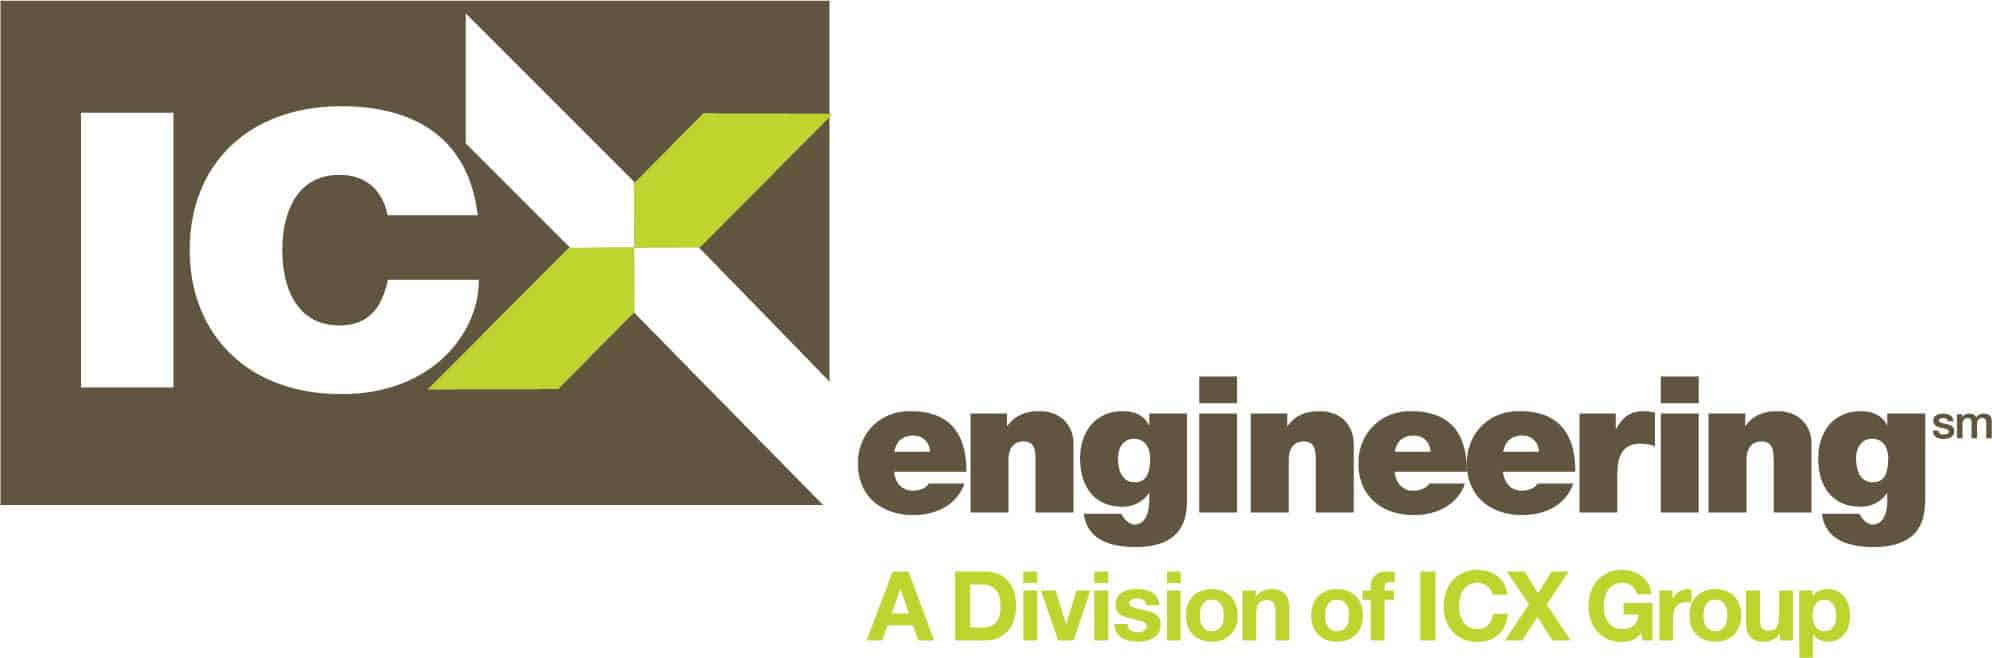 ICX Engineering Logo